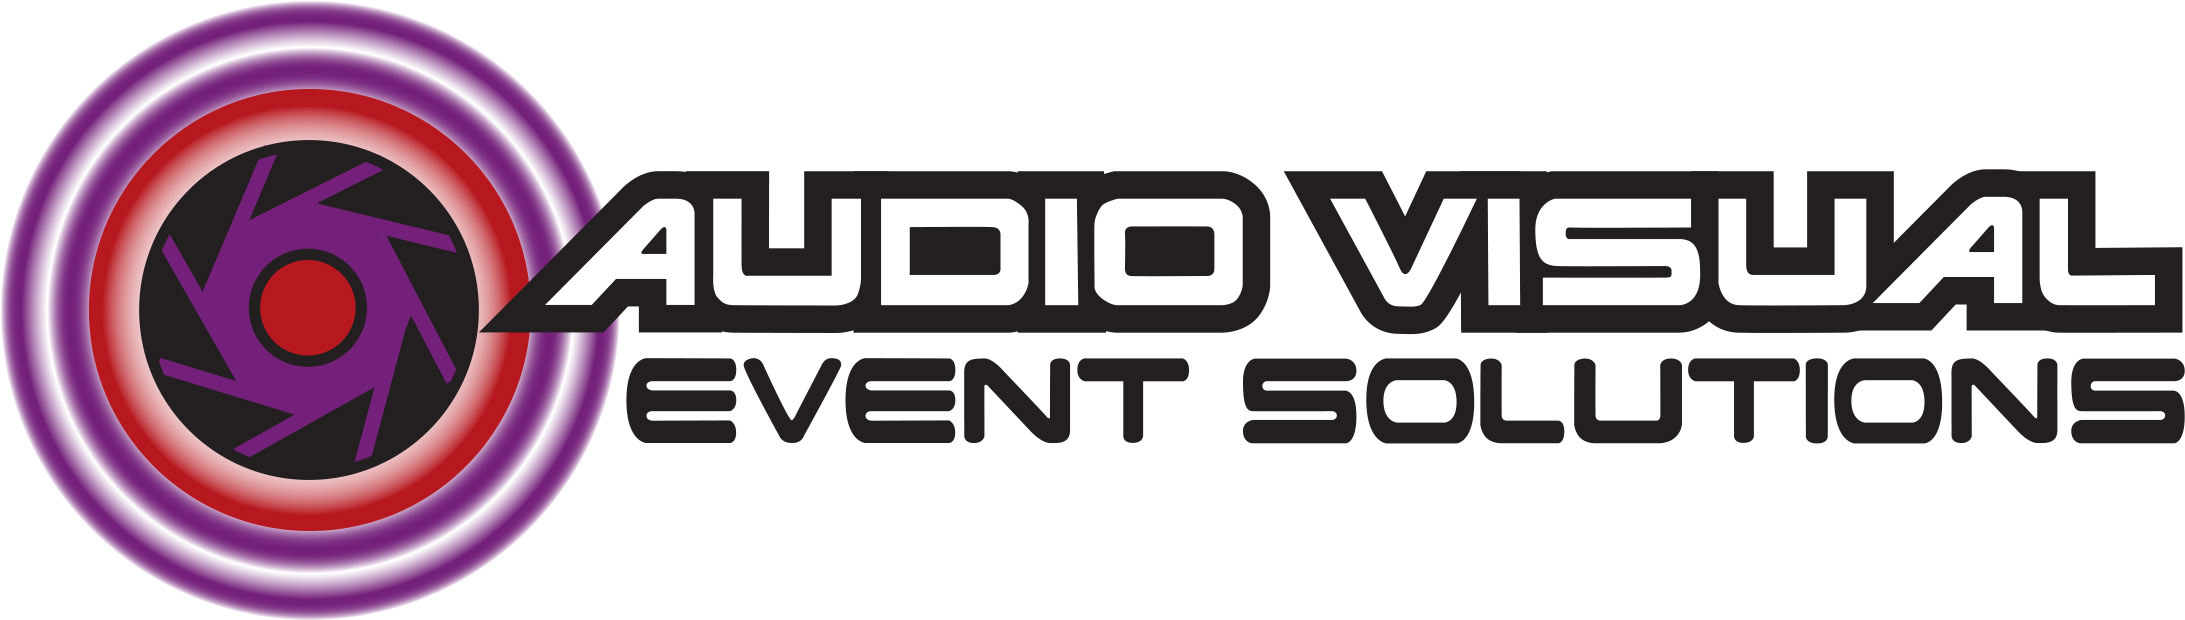 Audio Visual Event Solutions Logo